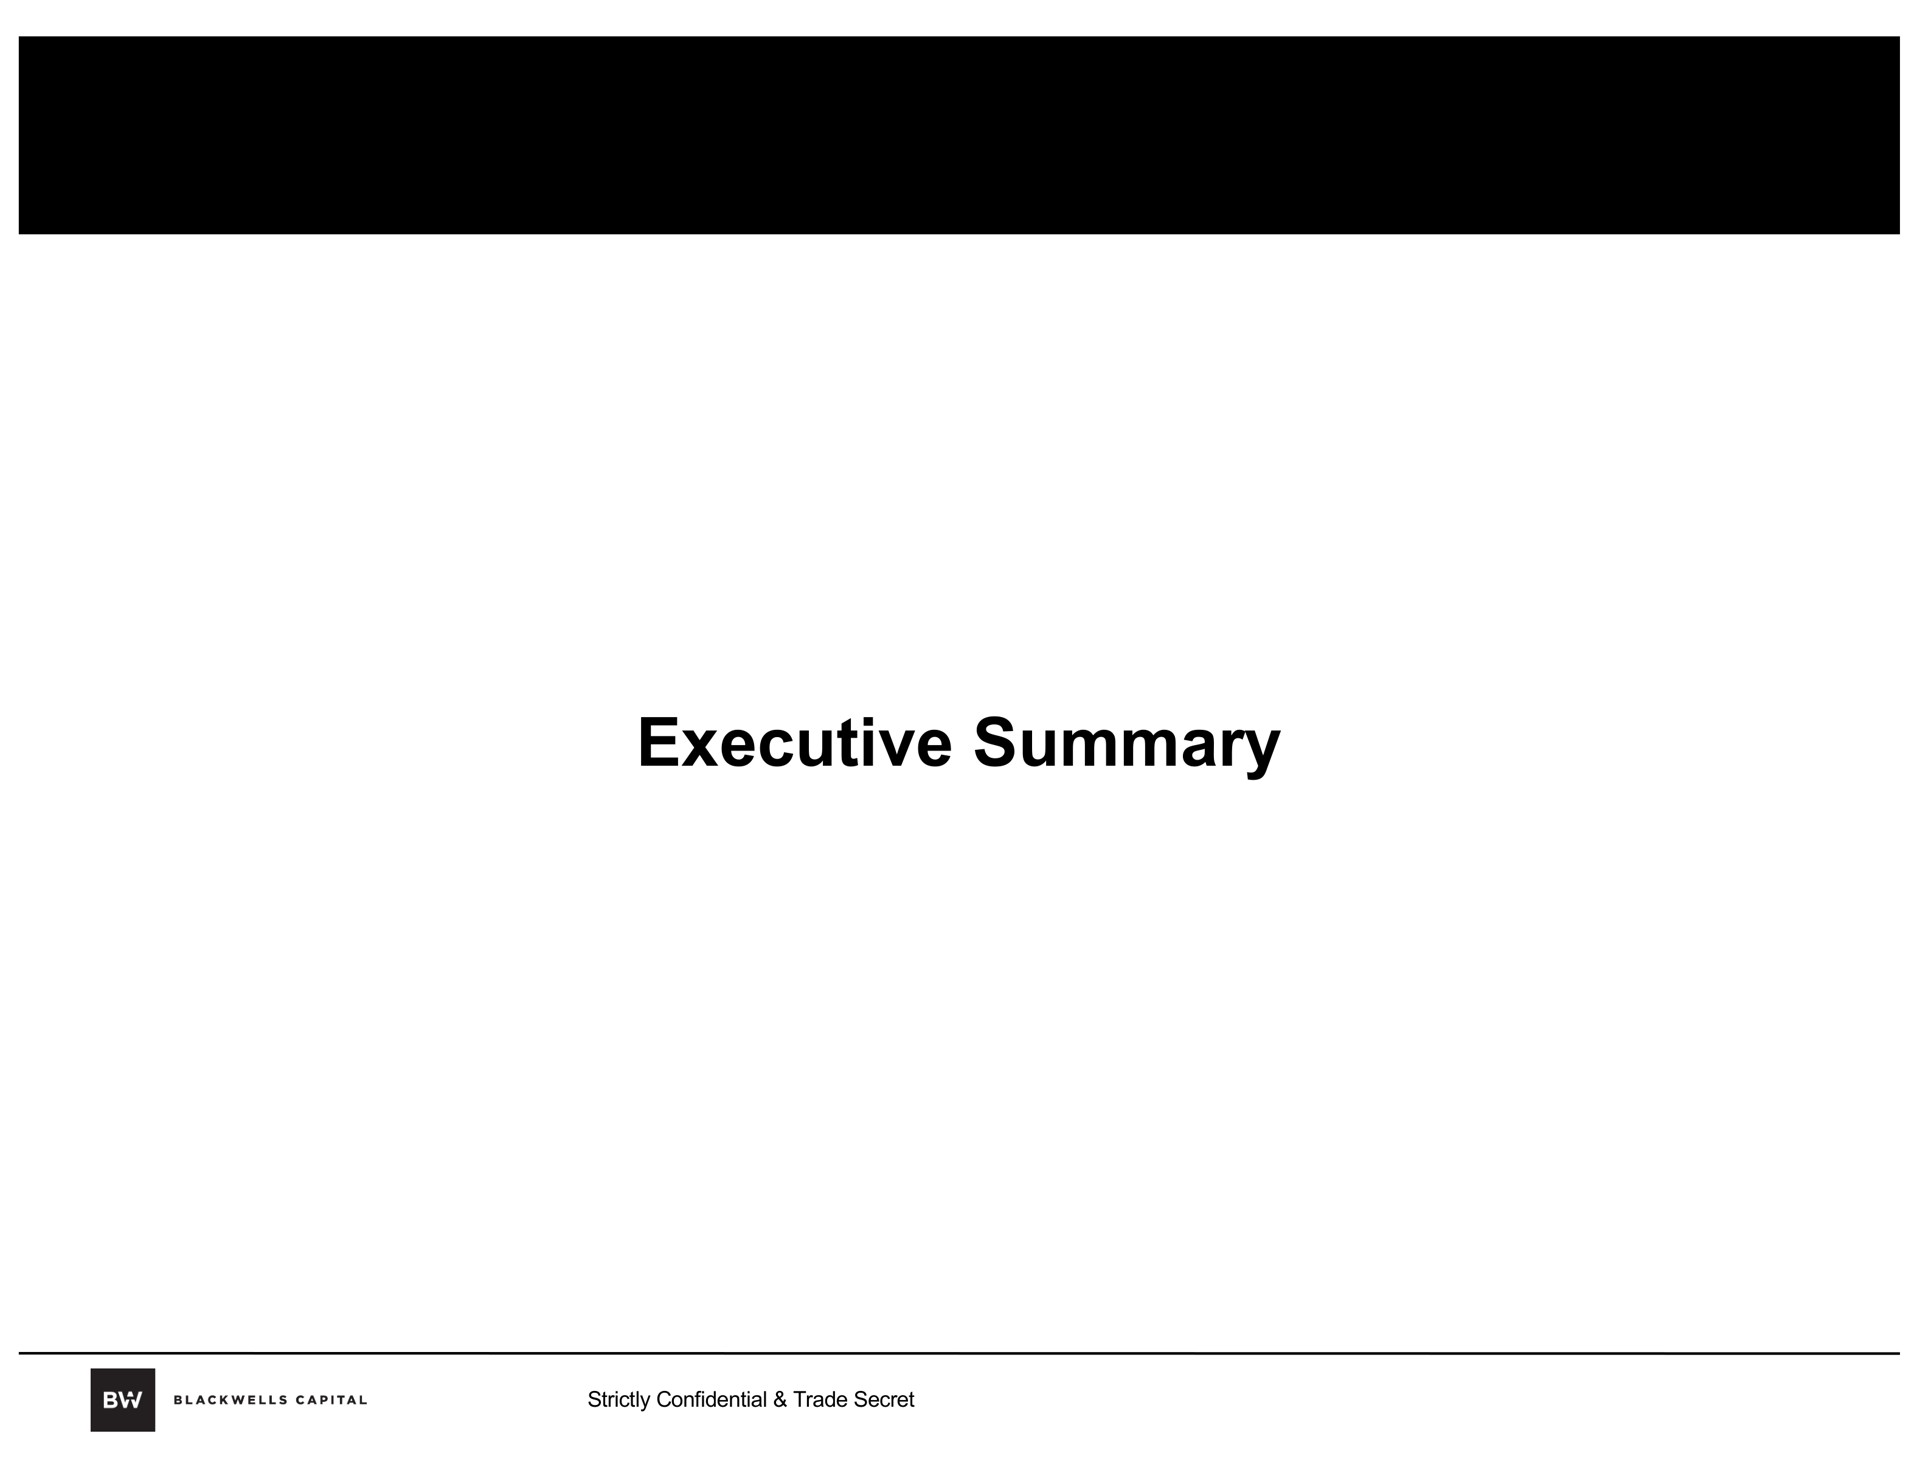 executive summary | Blackwells Capital